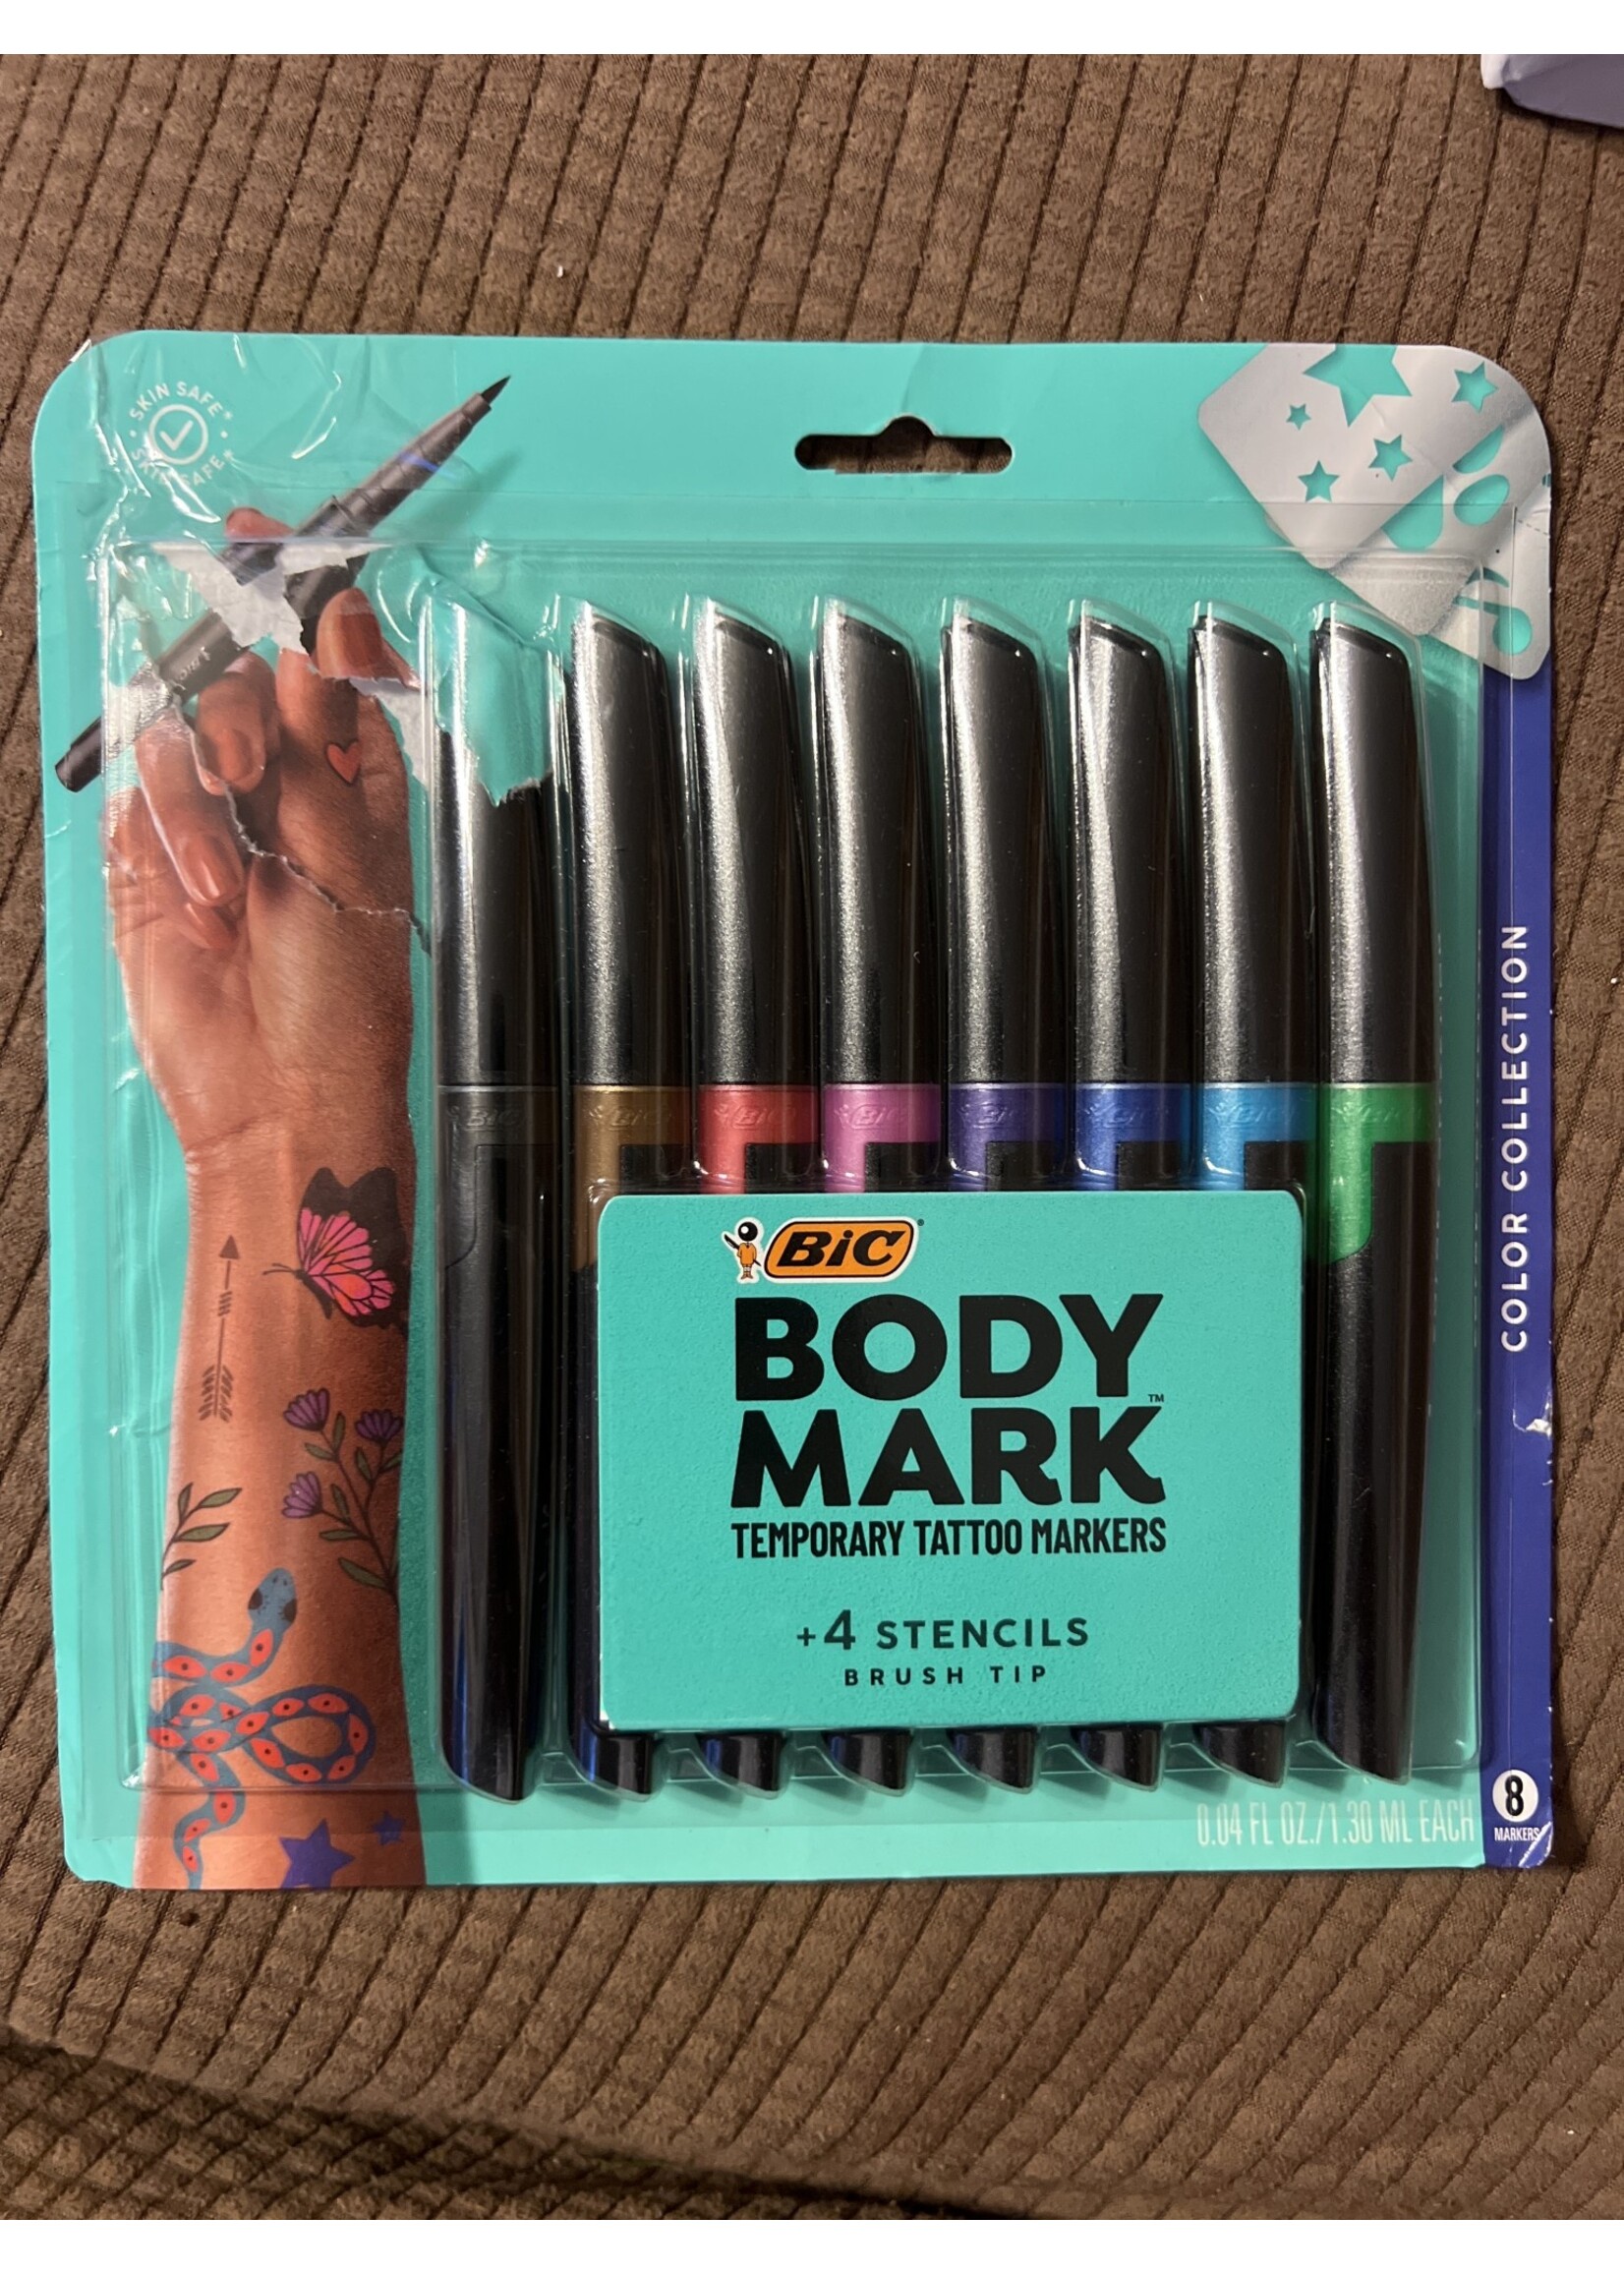 BodyMark by BIC, Temporary Tattoo Marker, Gift Set